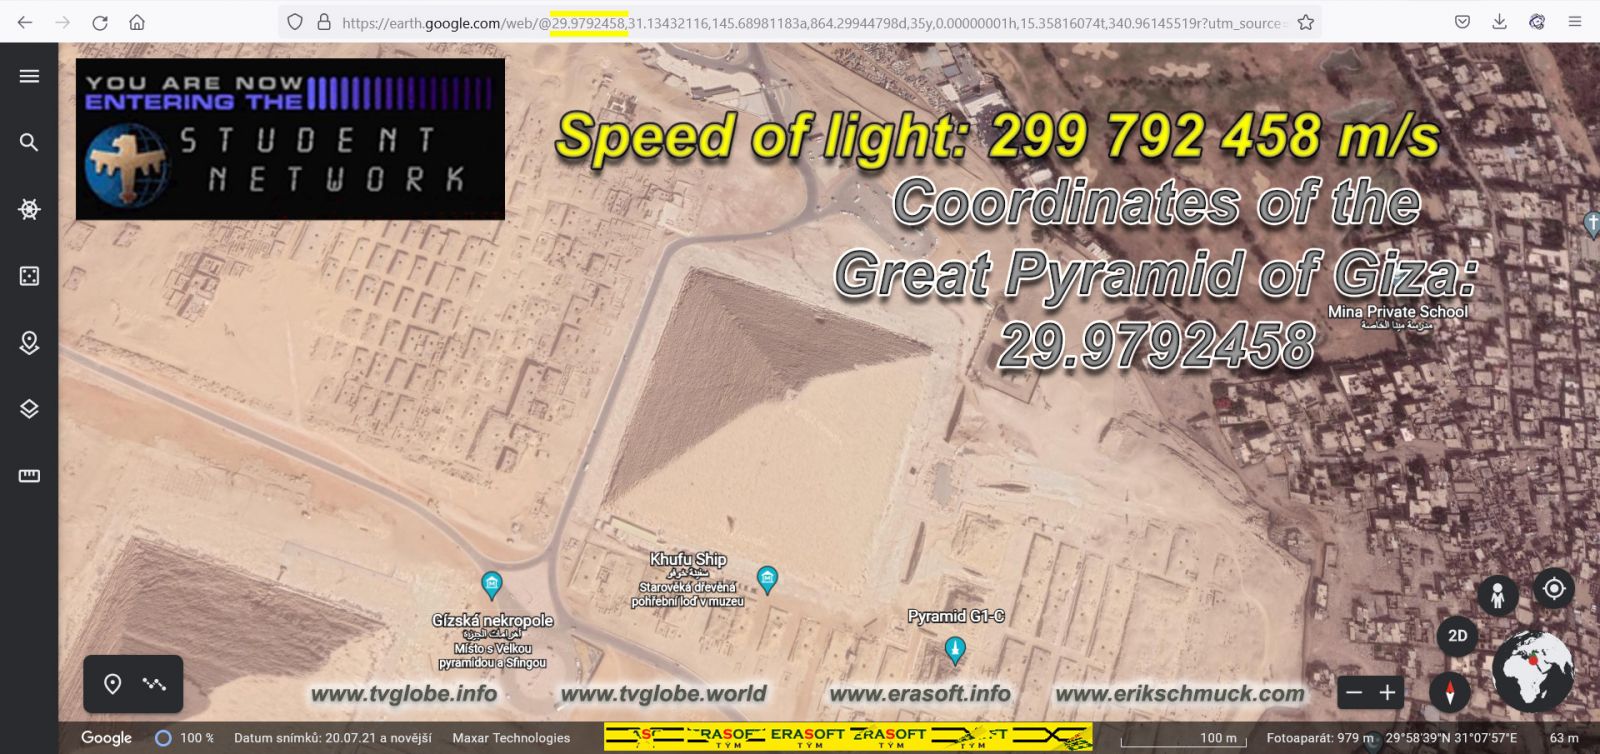 Great Pyramid of Giza   coordinates vs speed of light   Erik Schmuck DiS